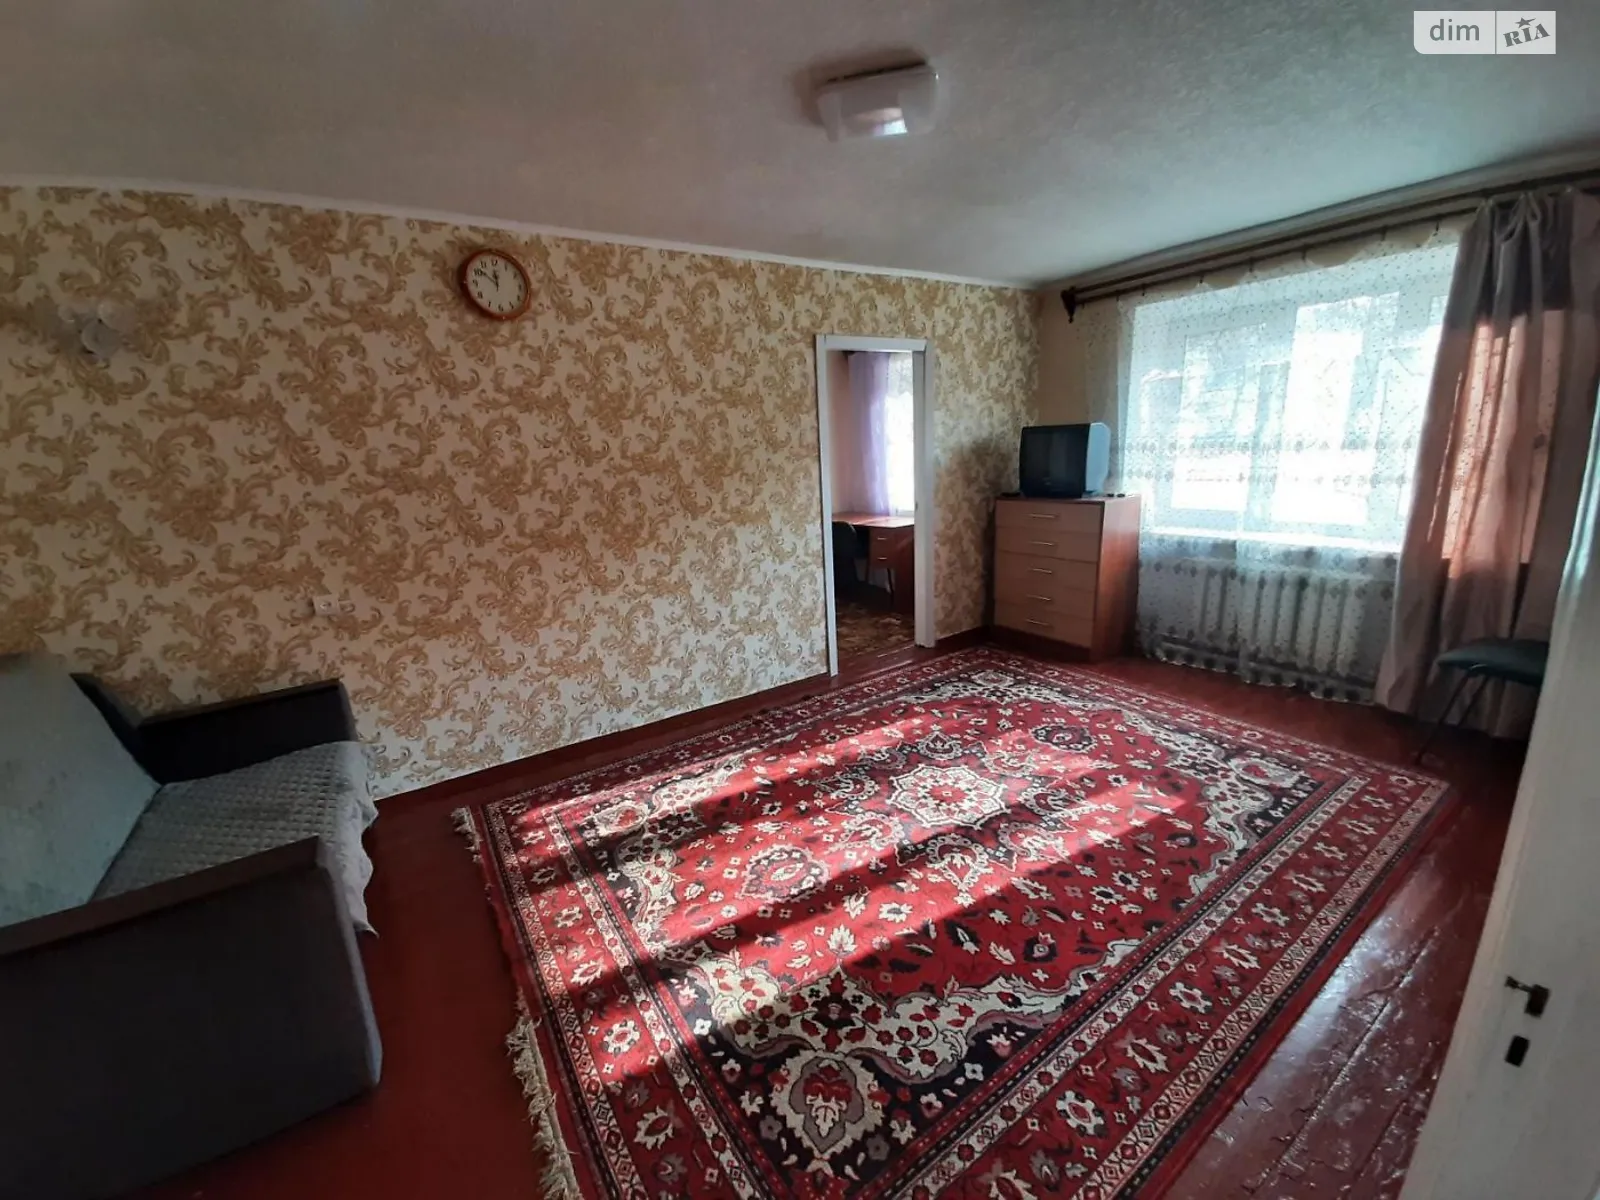 Продается комната 45 кв. м в Днепре - фото 3